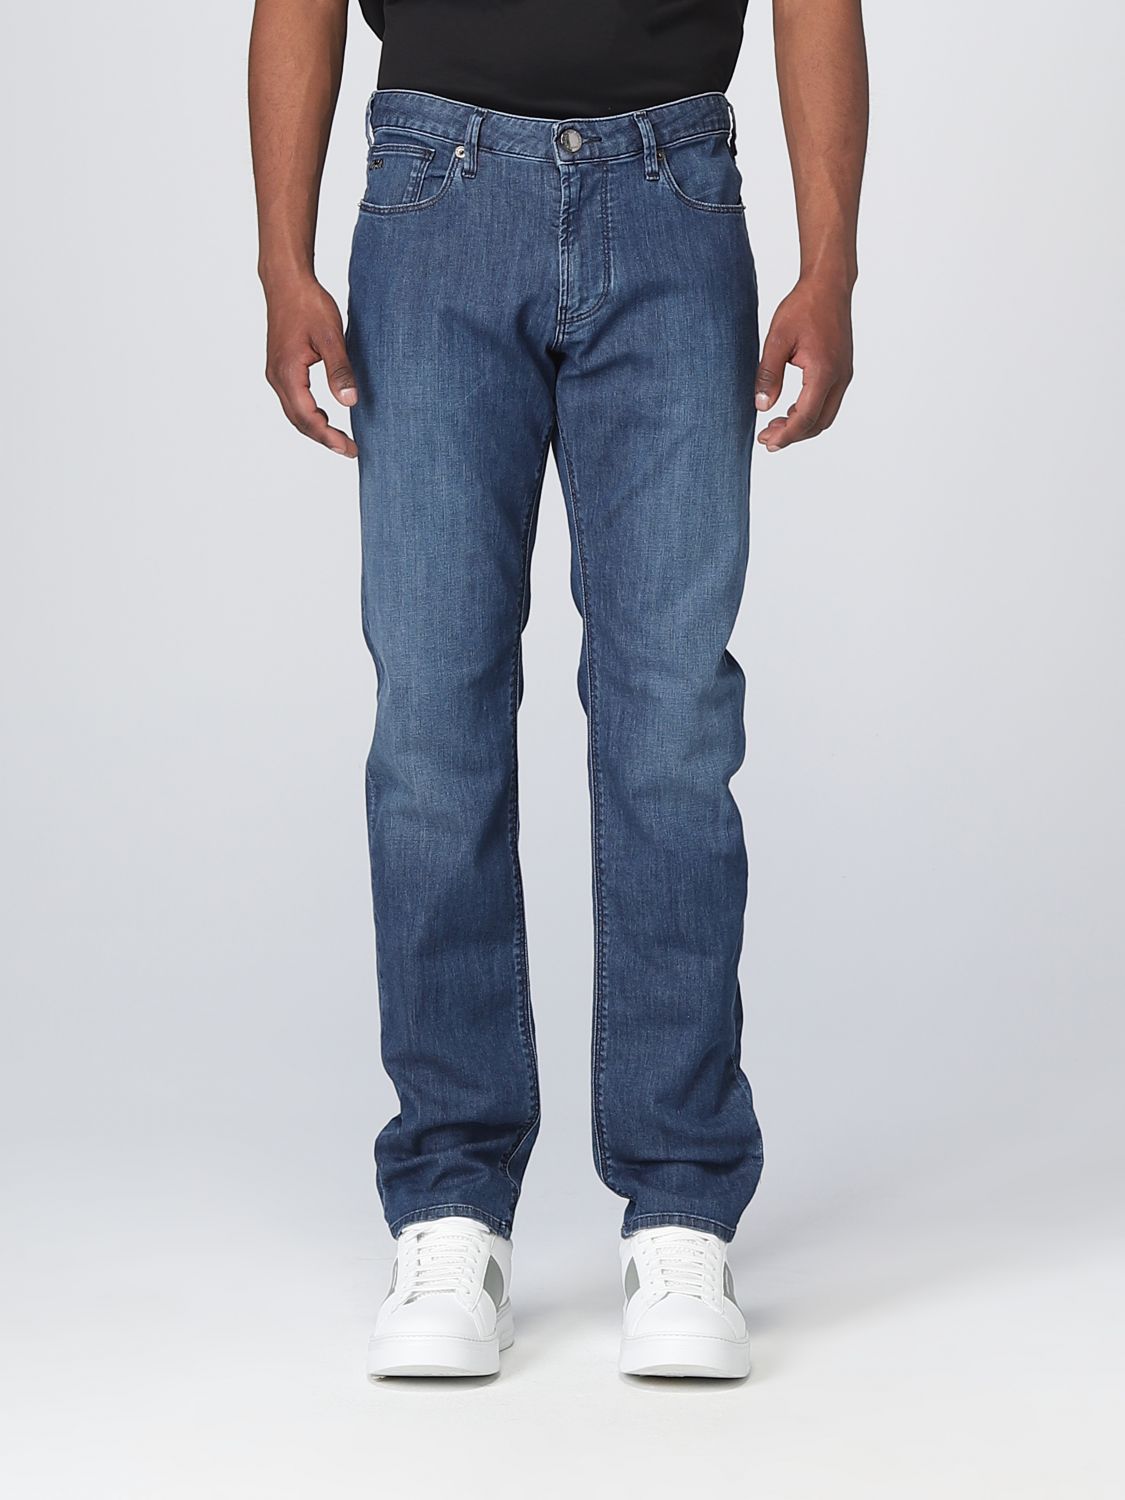 Jet zuurstof Dochter EMPORIO ARMANI: denim jeans - Denim | Emporio Armani jeans 8N1J061D85Z  online on GIGLIO.COM